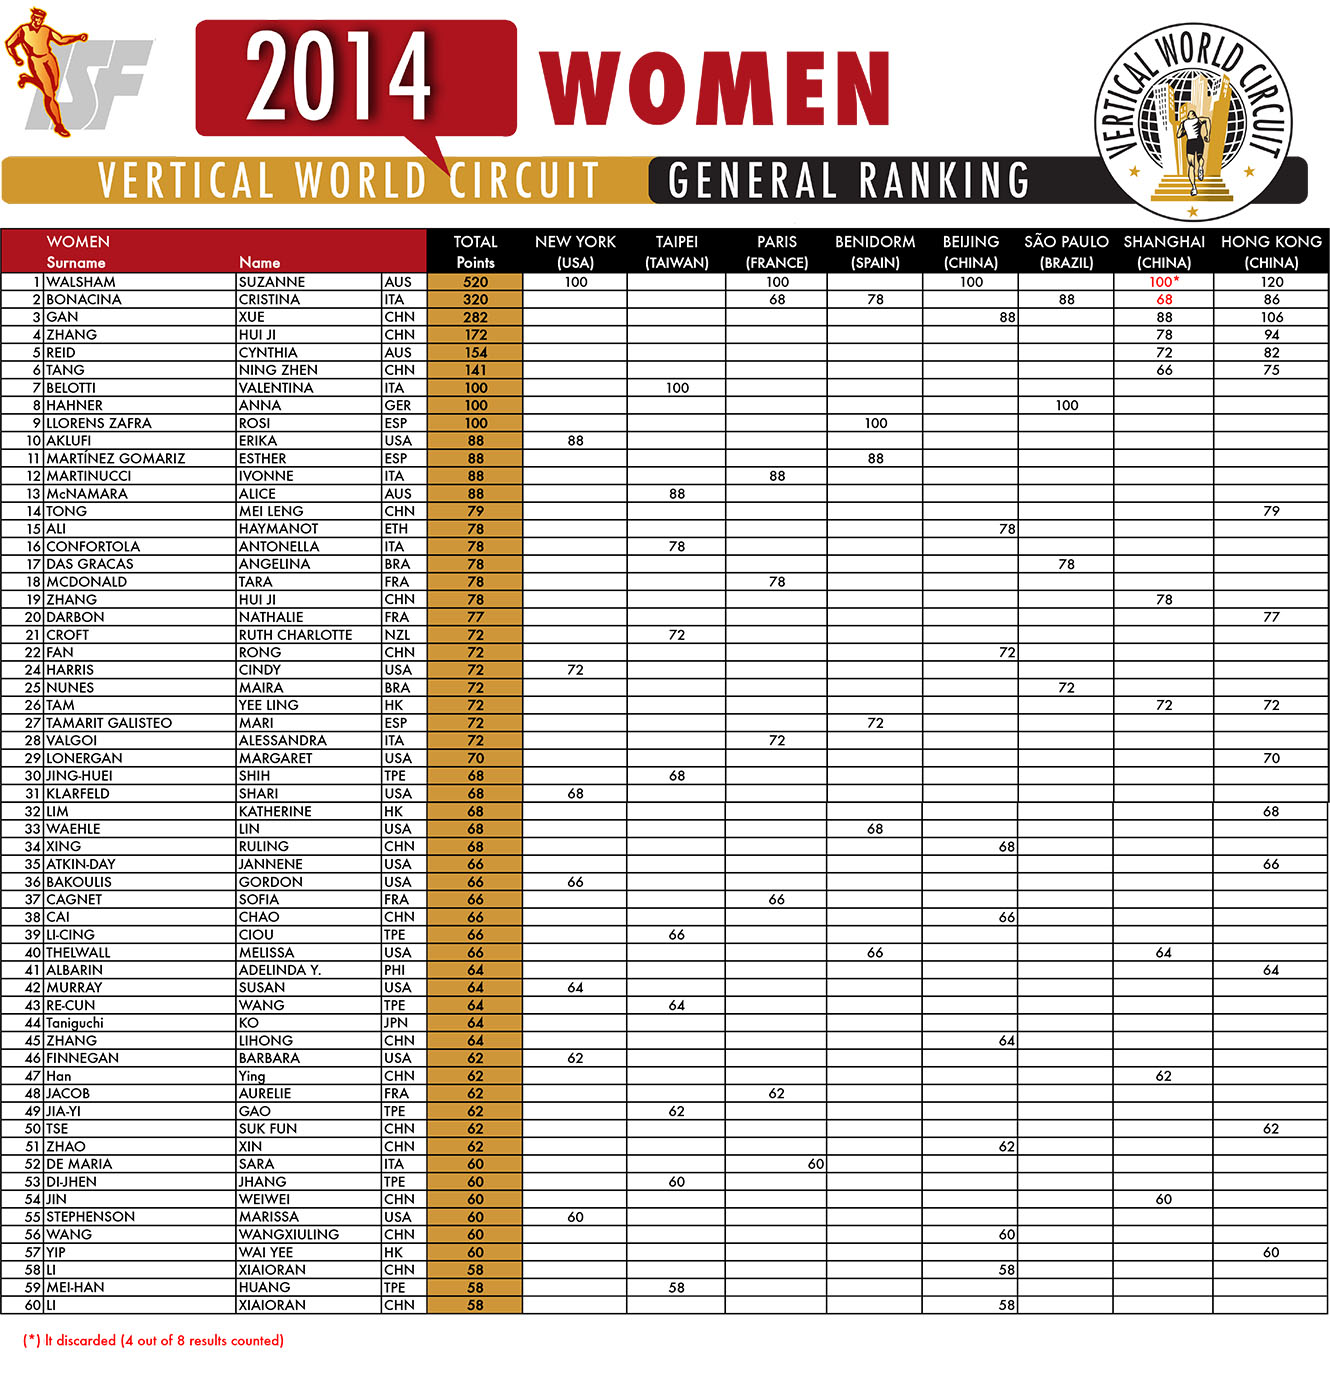 2014-ranking-men-women-DICEMBRE.xls